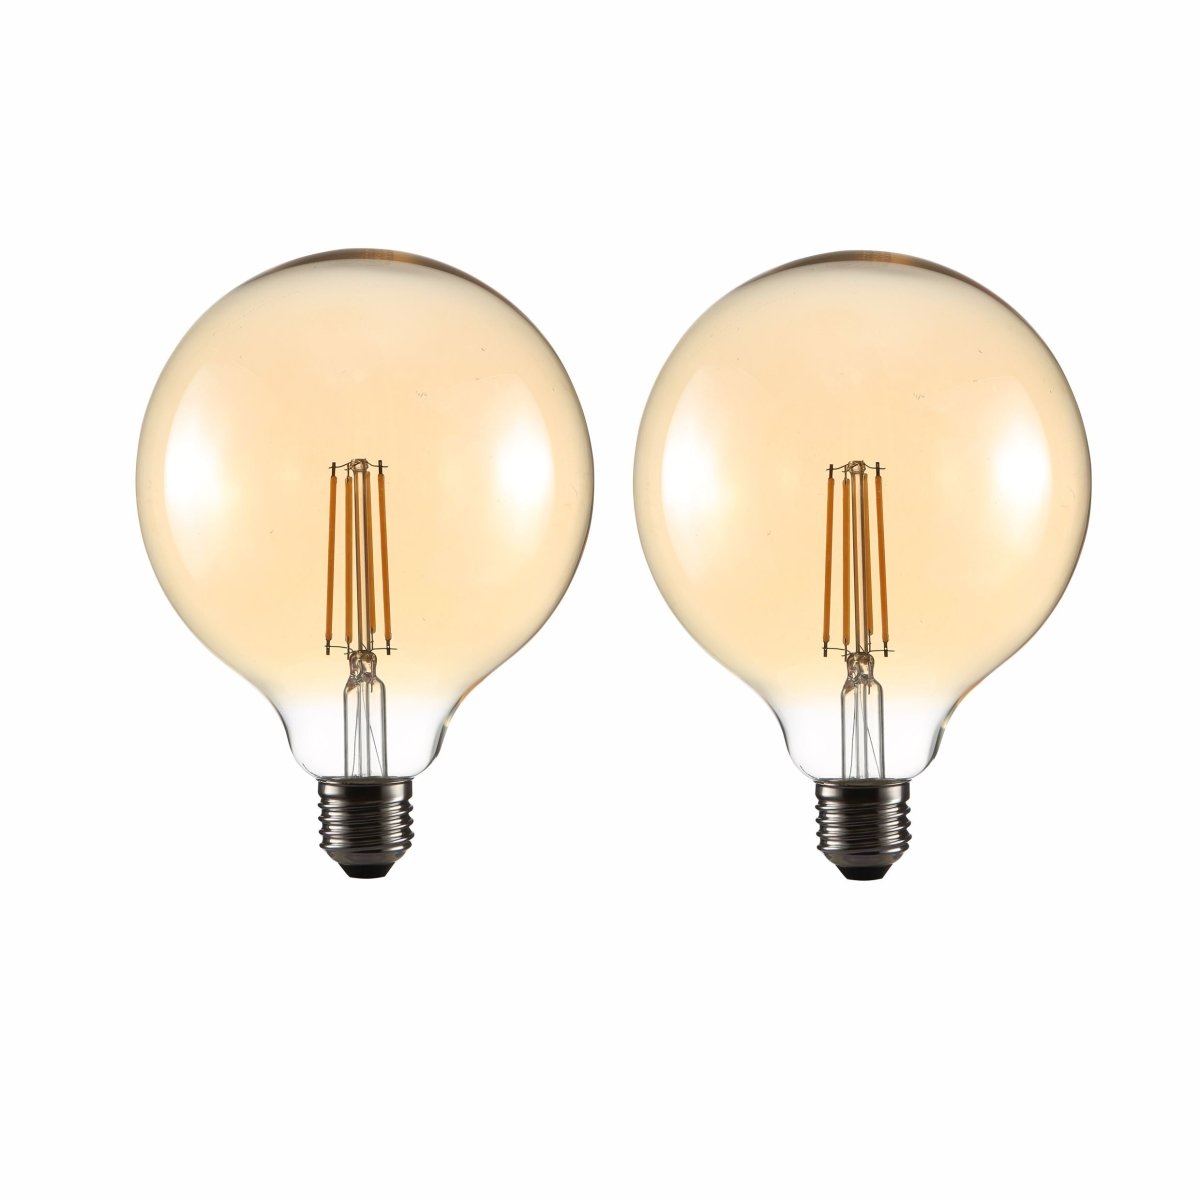 LED Filament Globe Bulb E27 Edison Screw Warm White 2400K G125 6.5w pack of 2